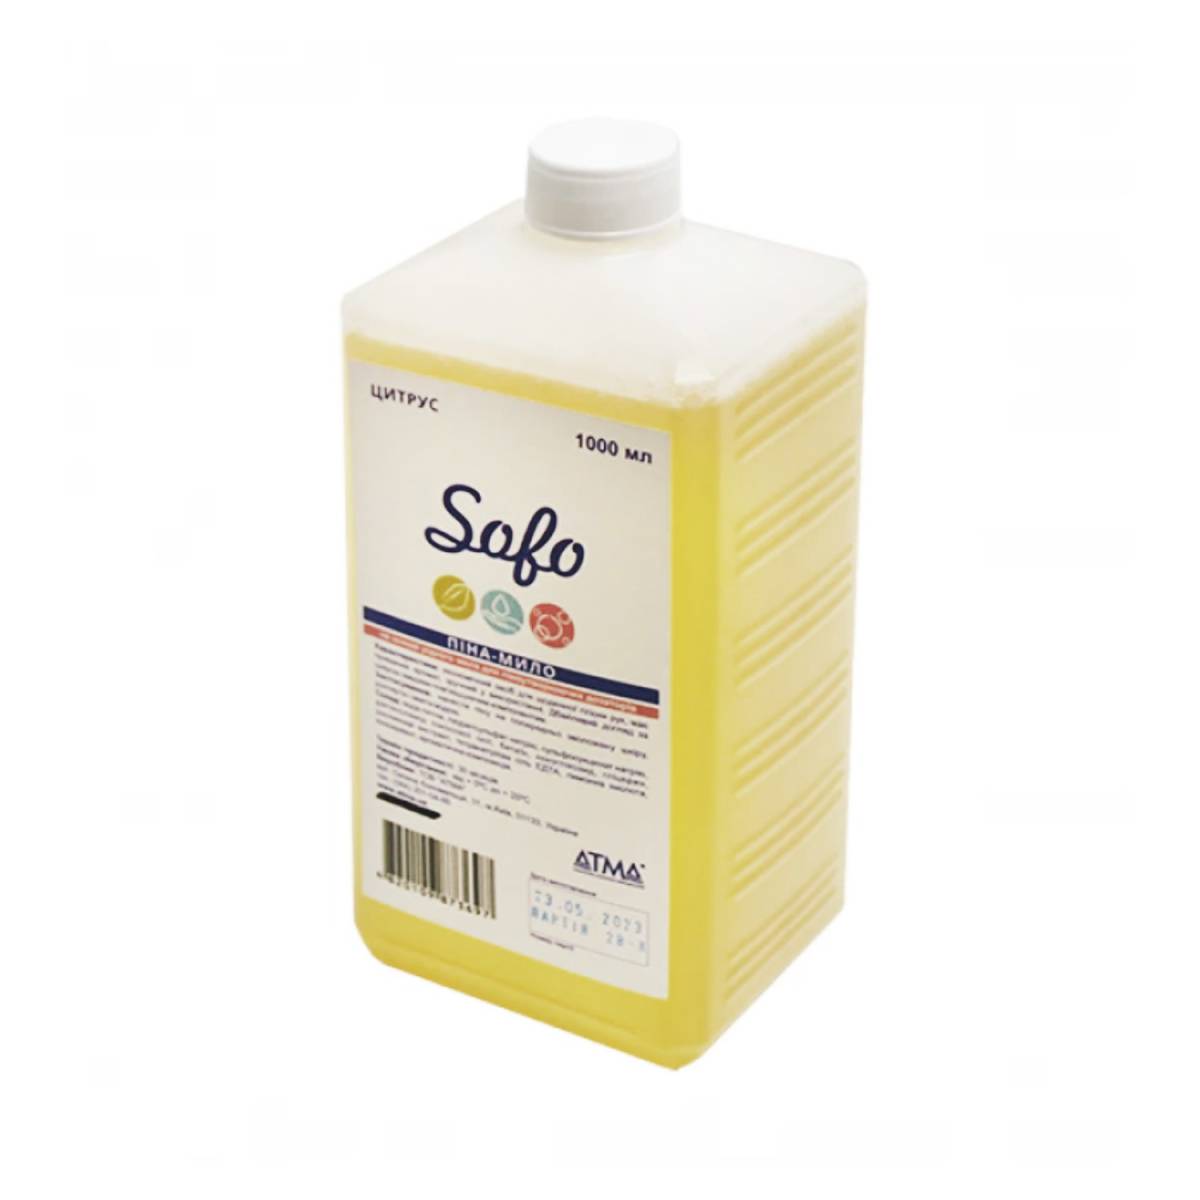 Мыло-пена SOFO 1 л